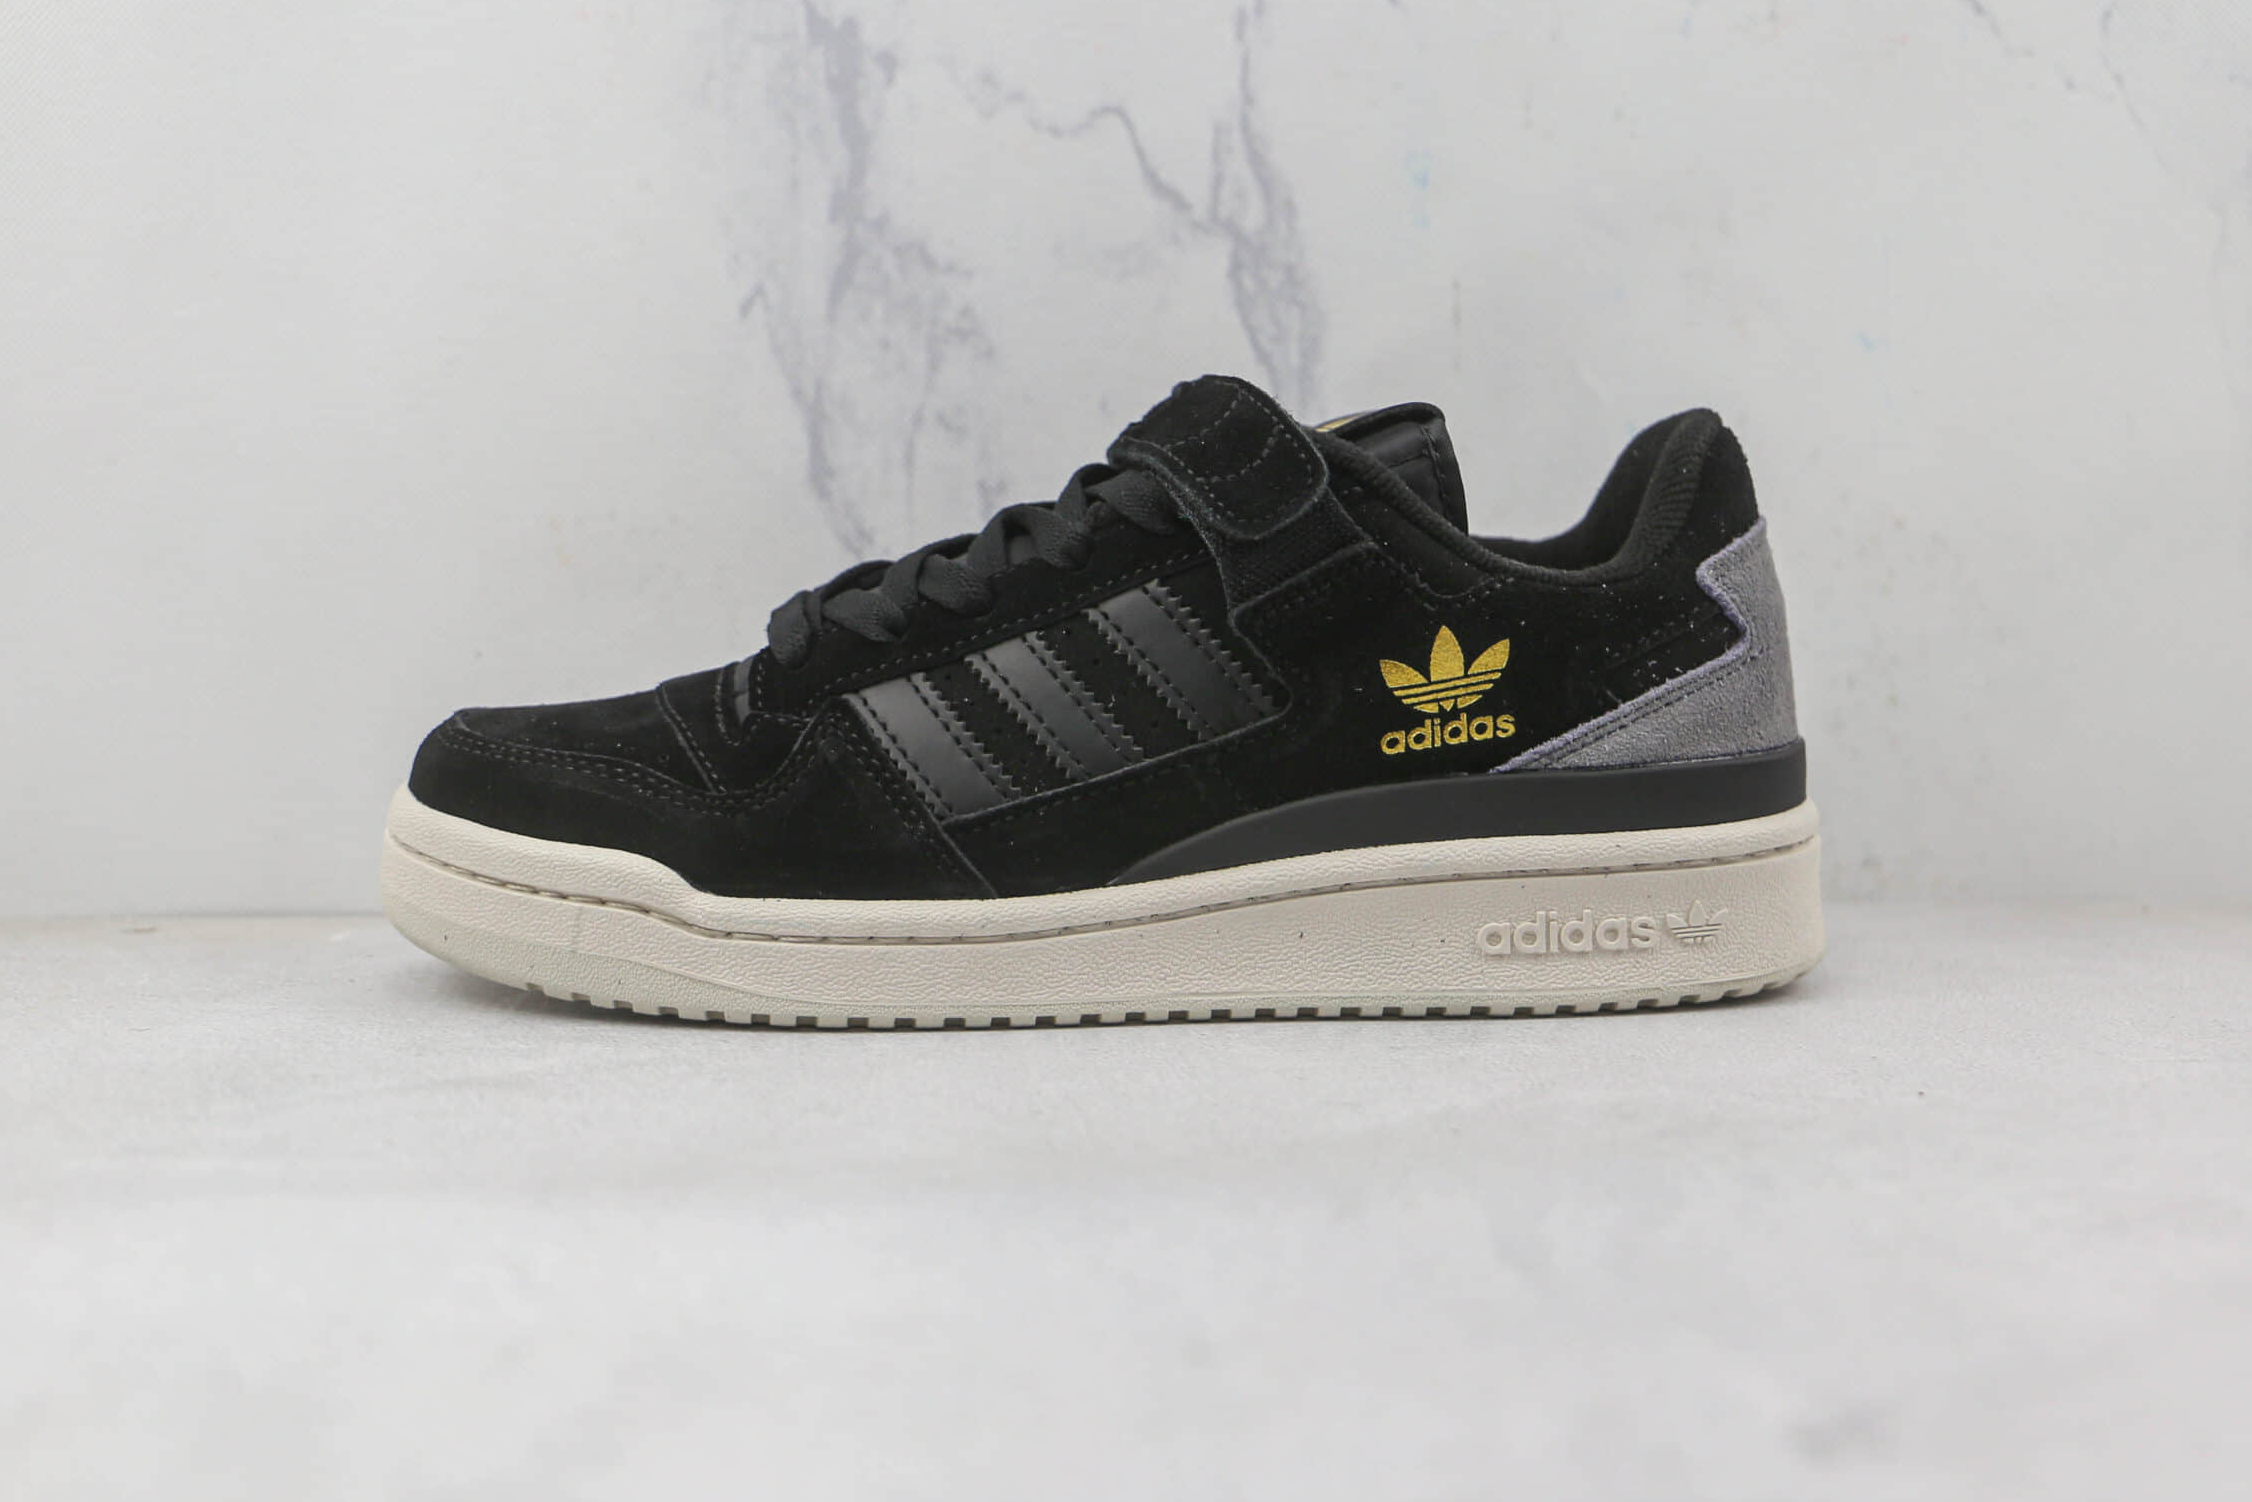 Adidas Forum 84 Low 'Black White' Q46366 - Sleek and Stylish Sneaker for Modern Sportswear | Shop Now!